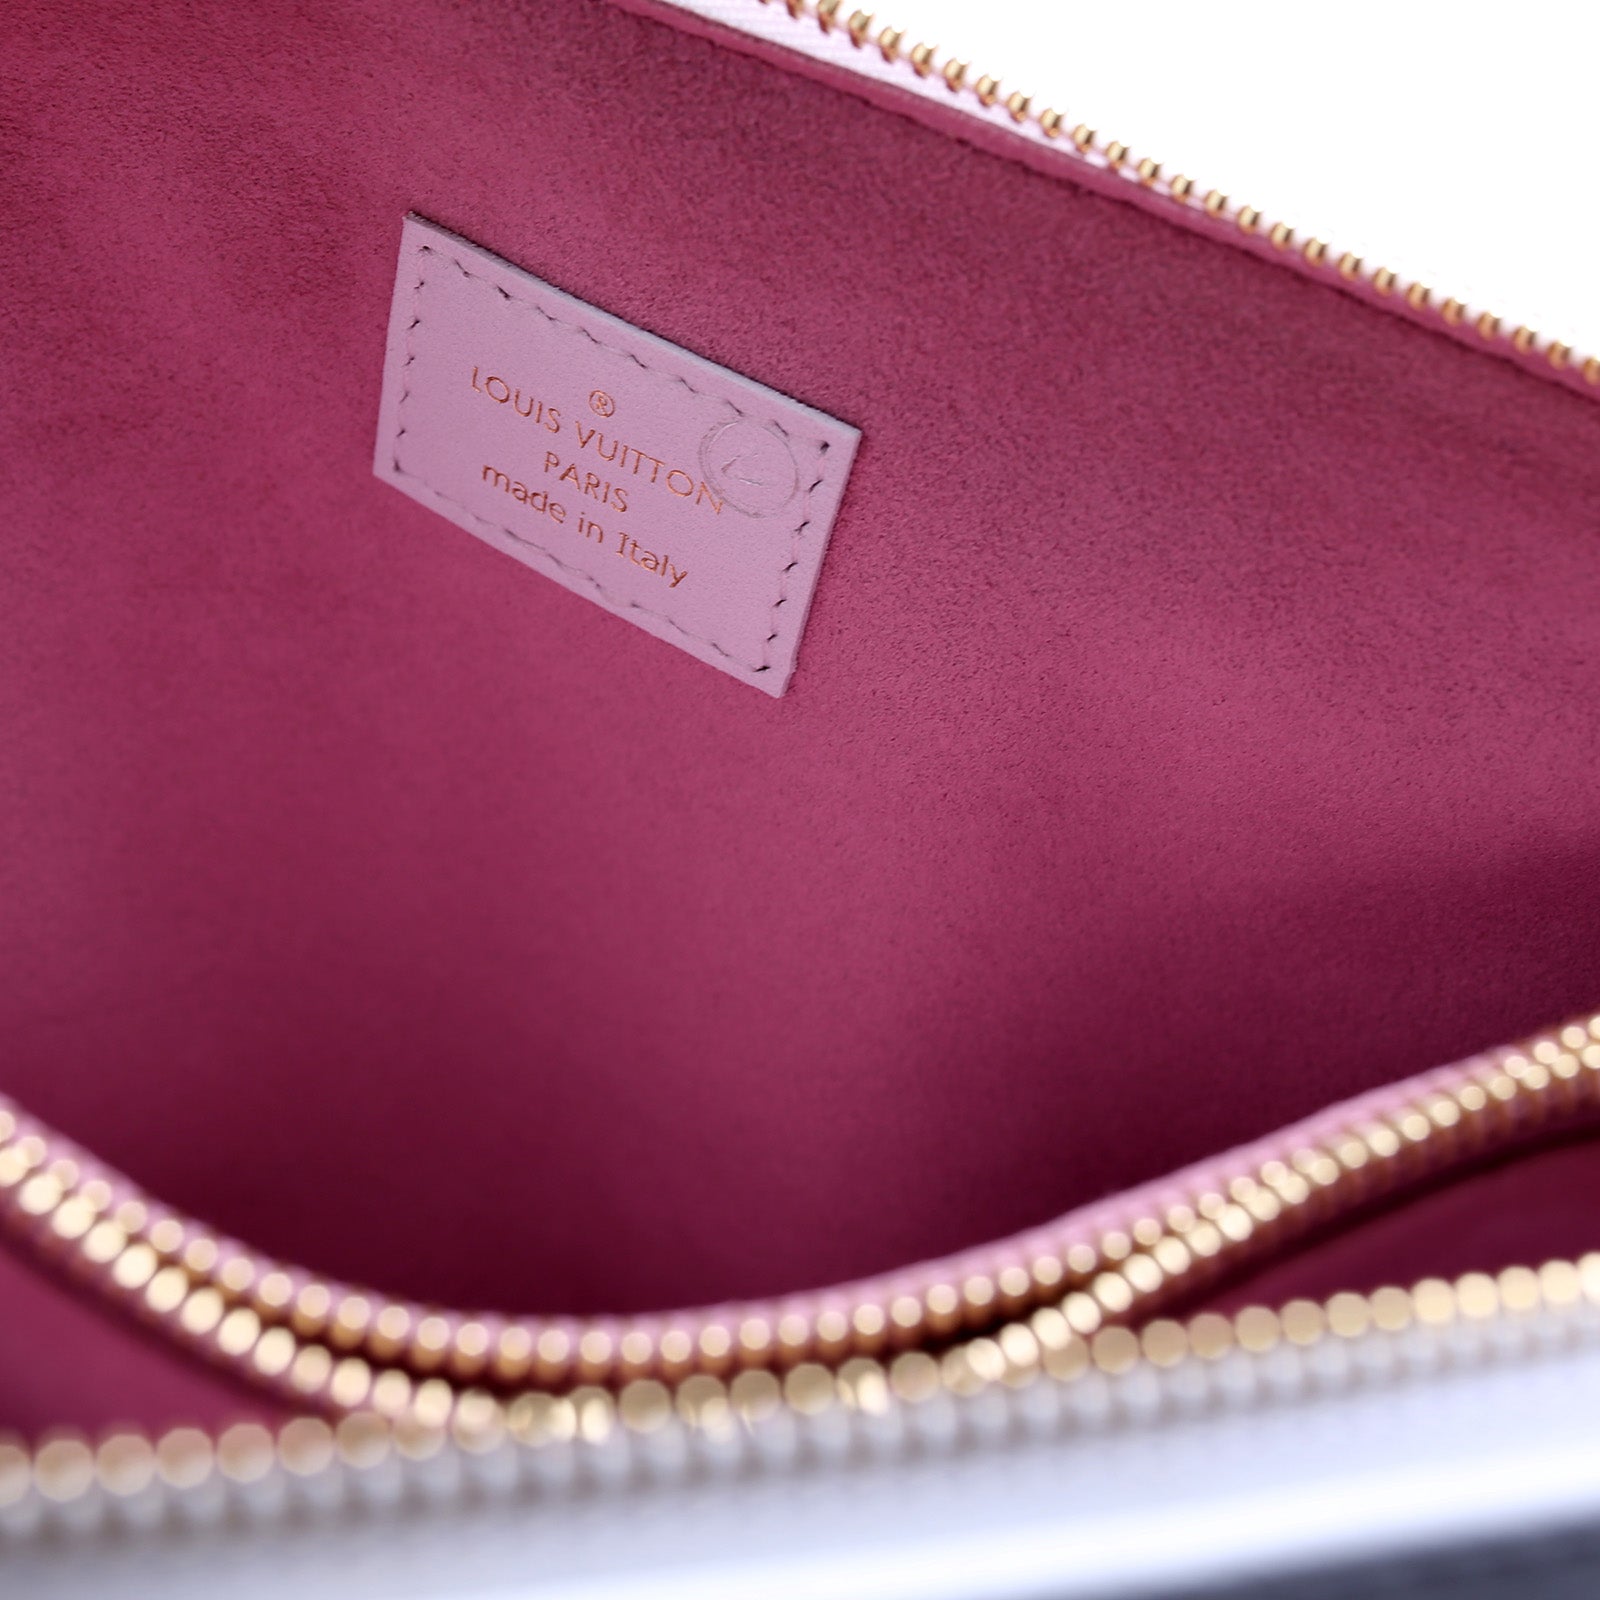 Shop Louis Vuitton Coussin pm (M57790) by MUTIARA